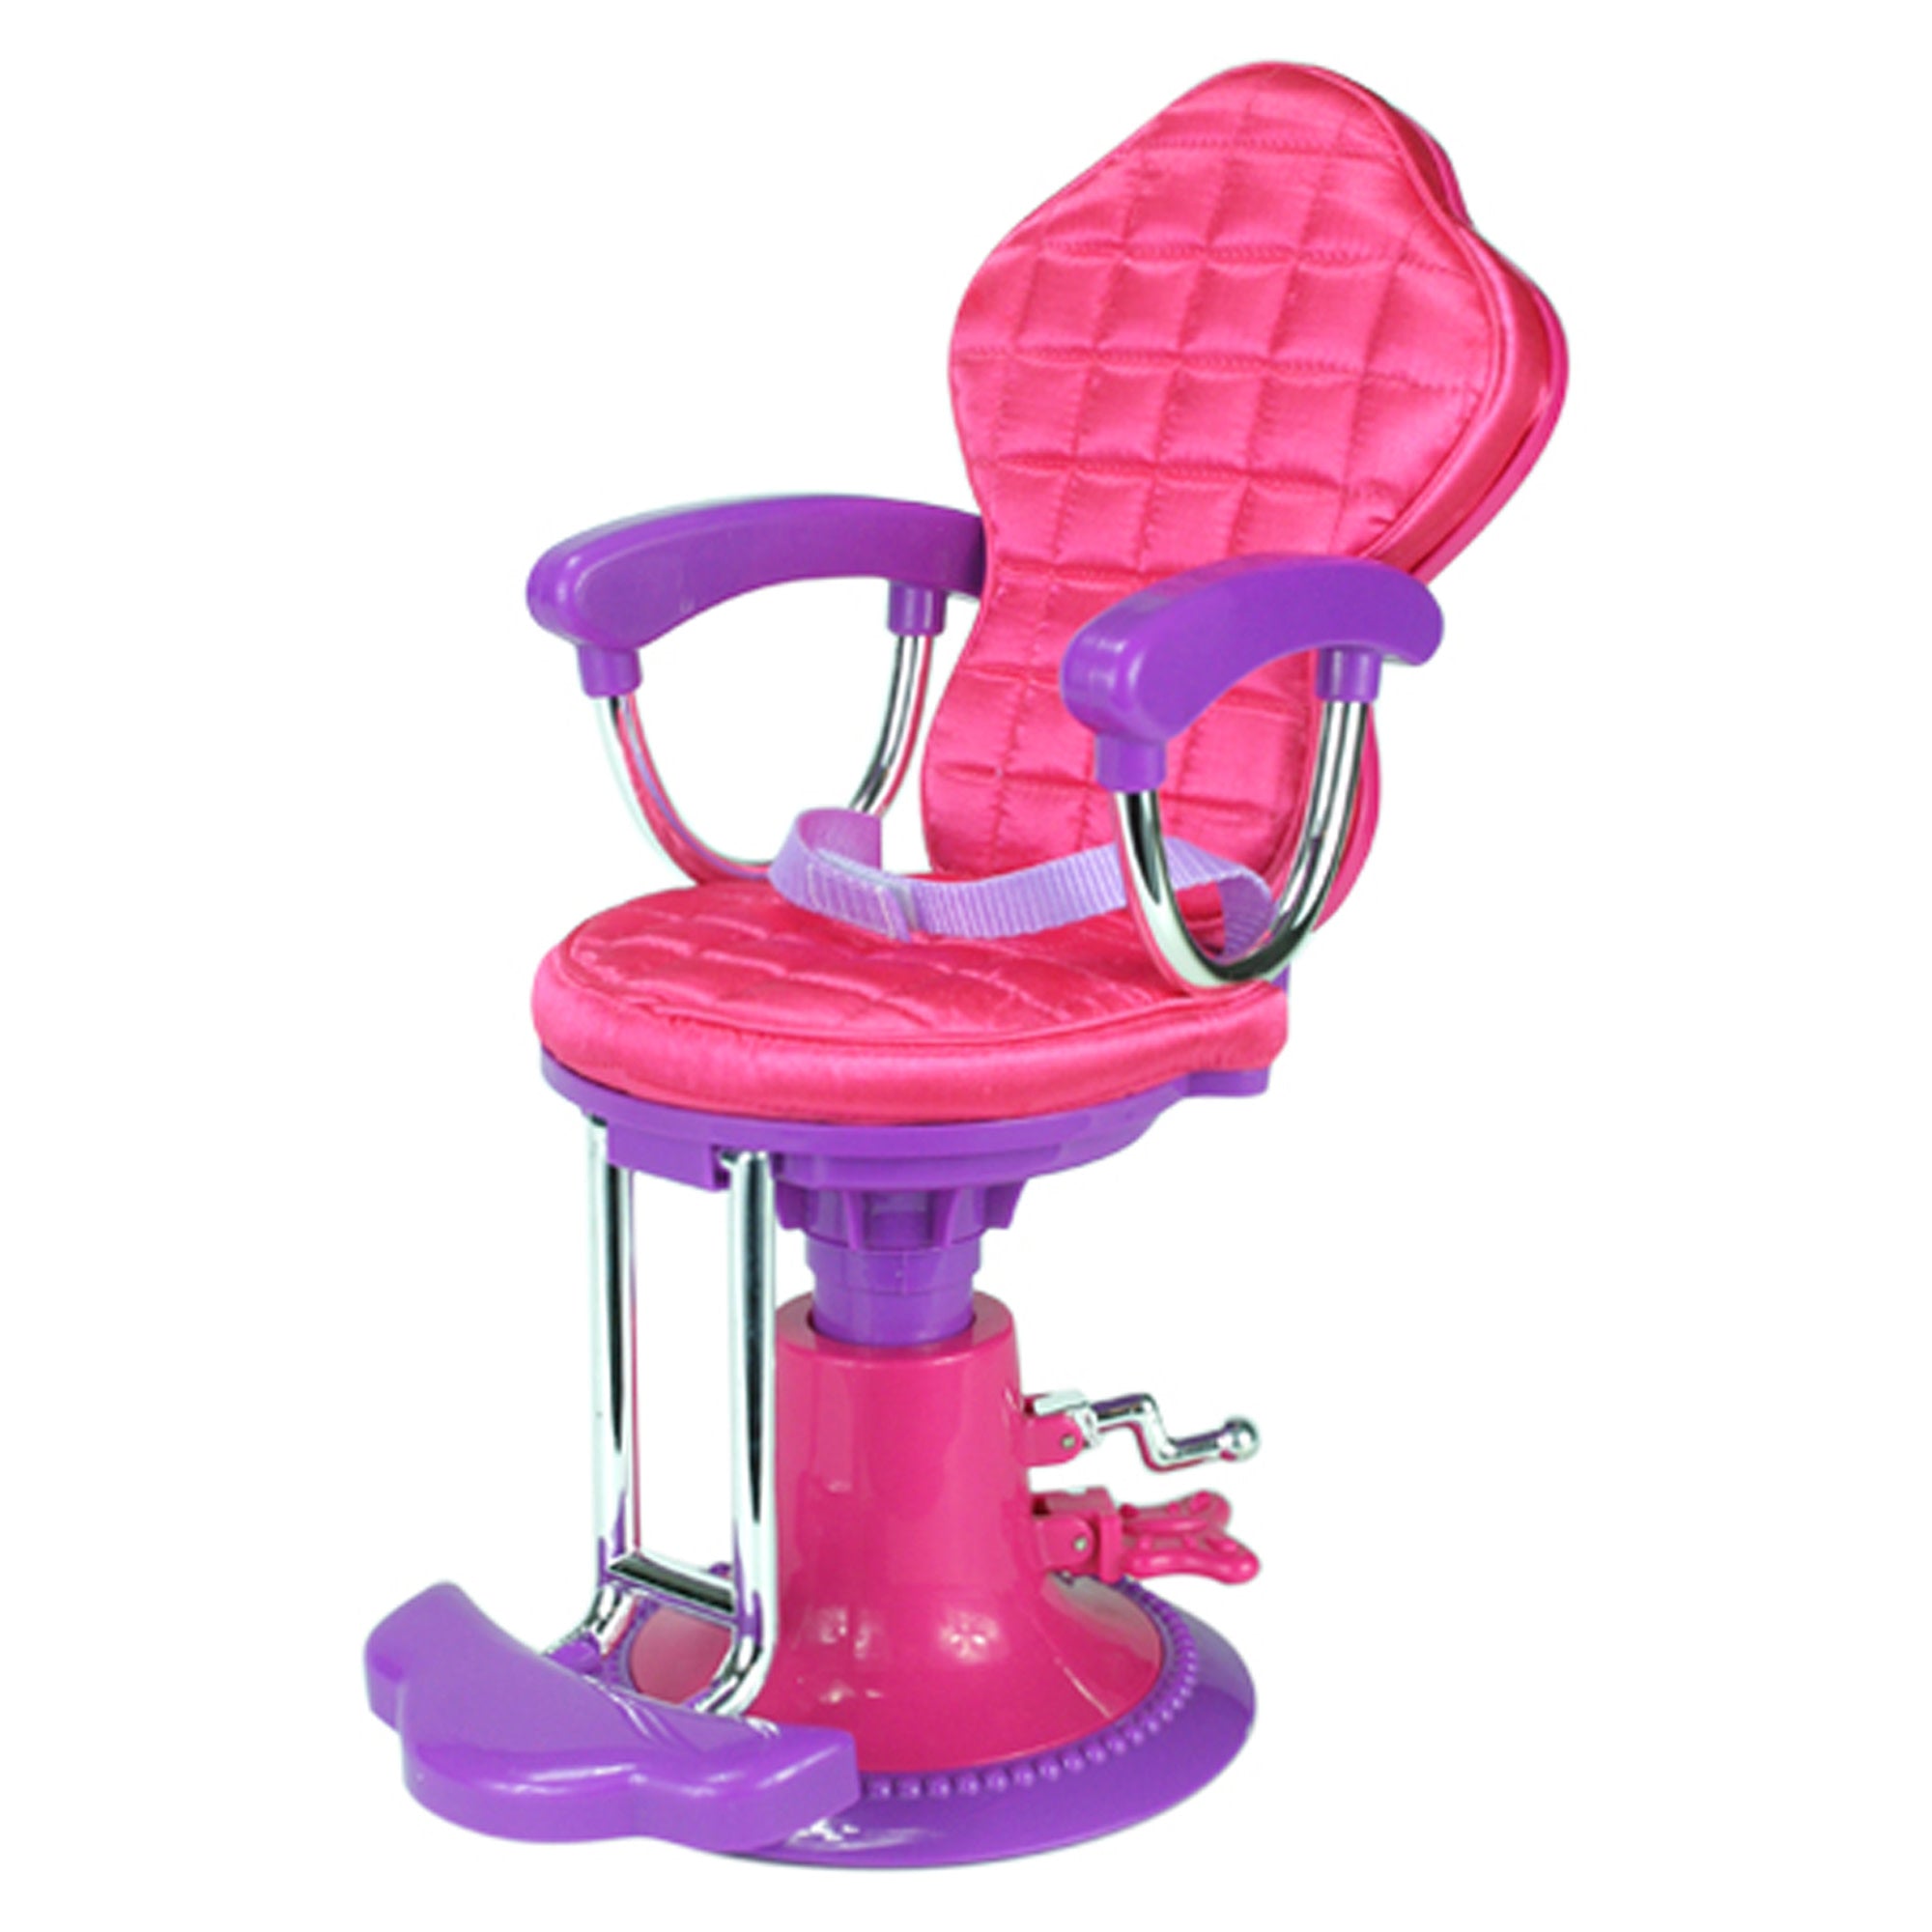 Sophias Salon Chair with Adjustable Height and Quilted Set for 18" Dolls, Hot Pink